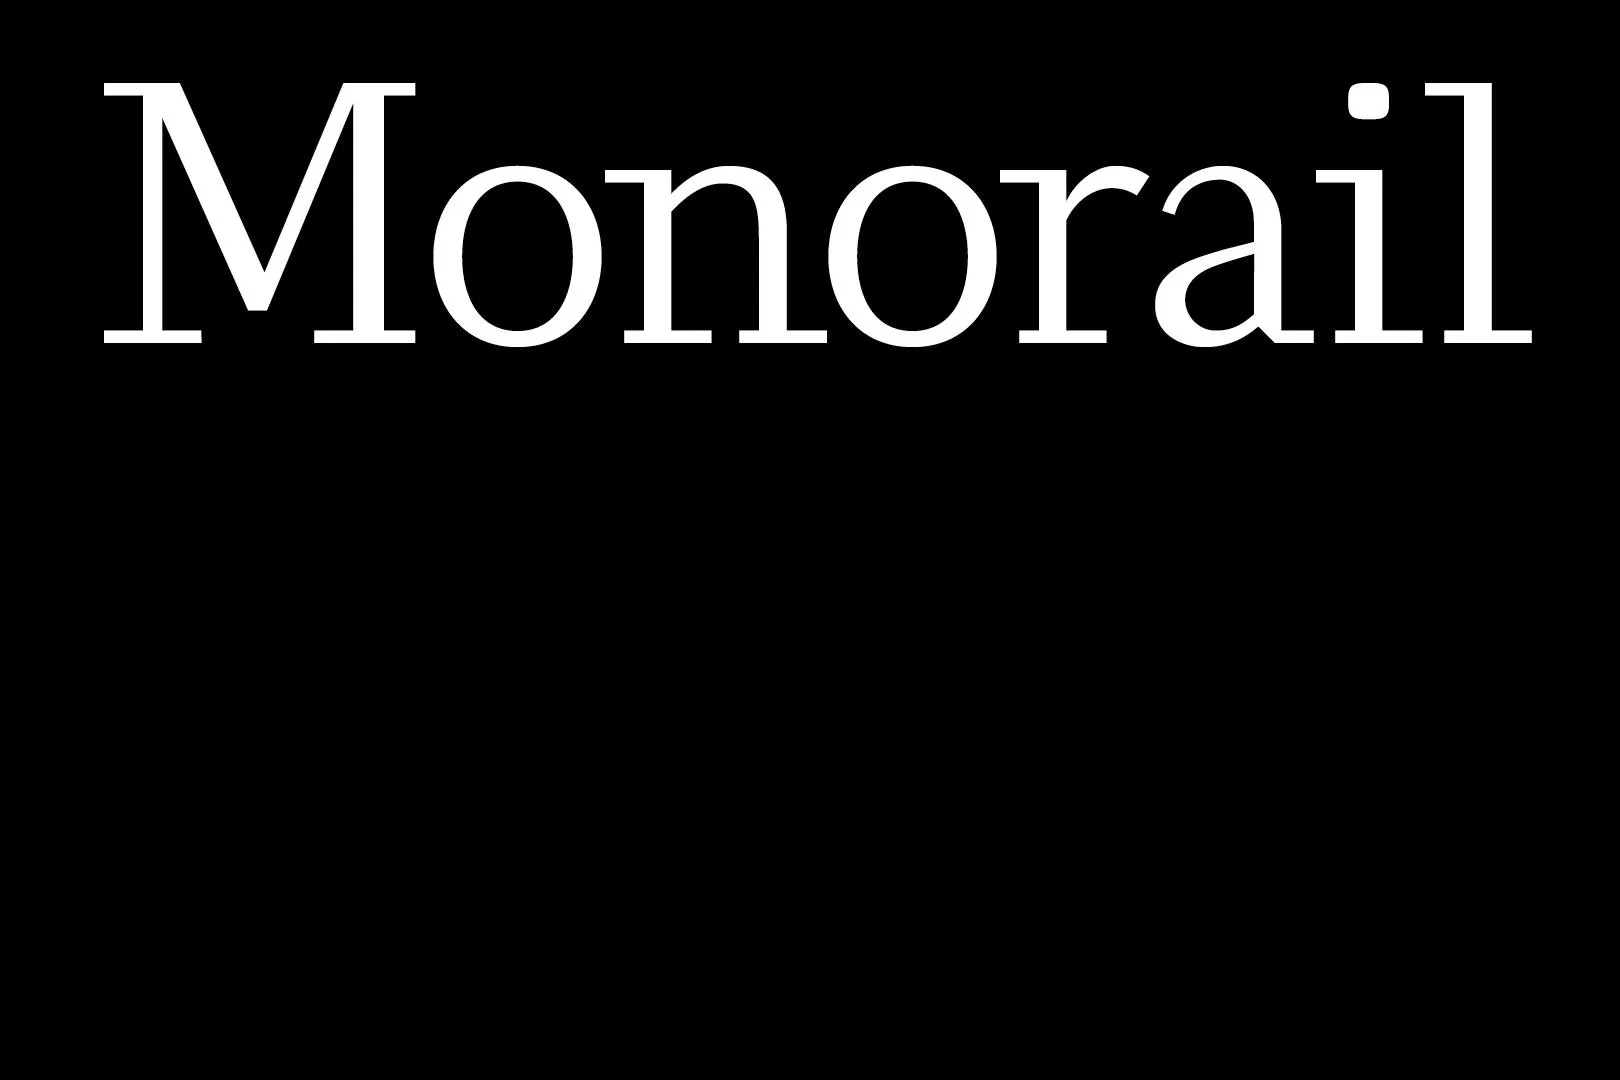 Monorail – Specimen typographique